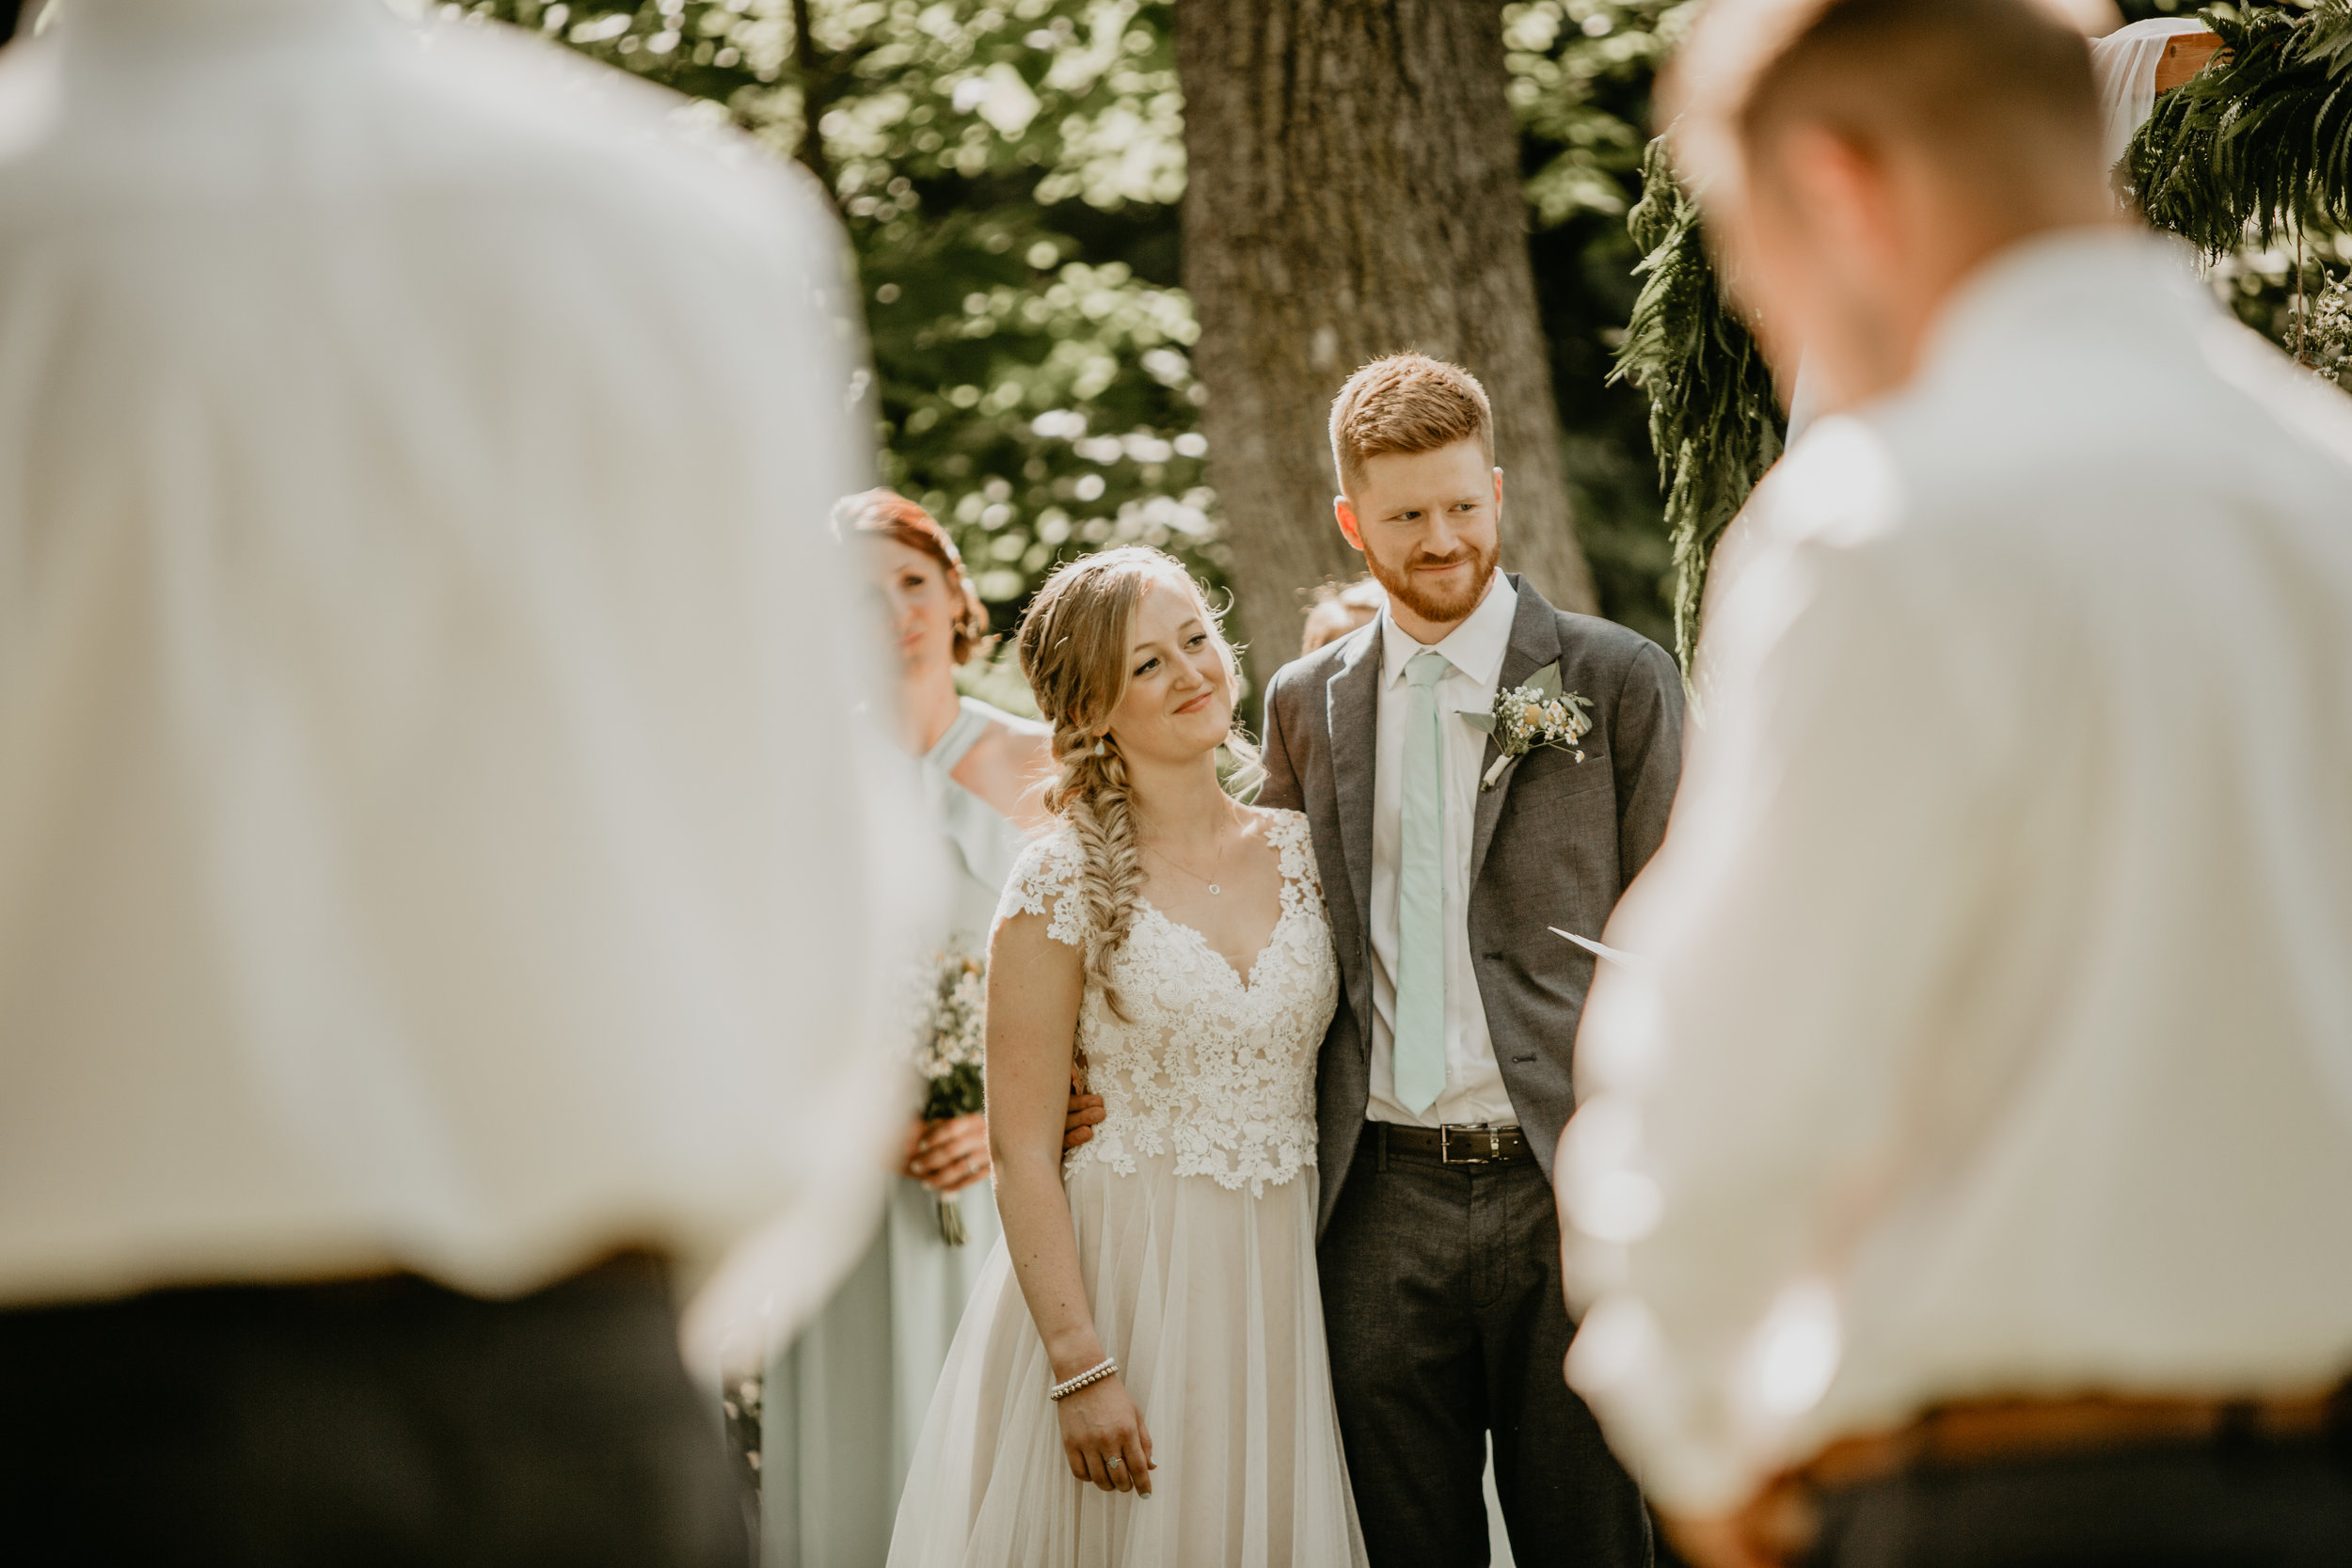 Nicole-Daacke-Photography-pennsylvania-laid-back-outside-backyard-wedding-family-summer-june-maryland-barefoot-bride-woodland-trees-sunset-couple-43.jpg